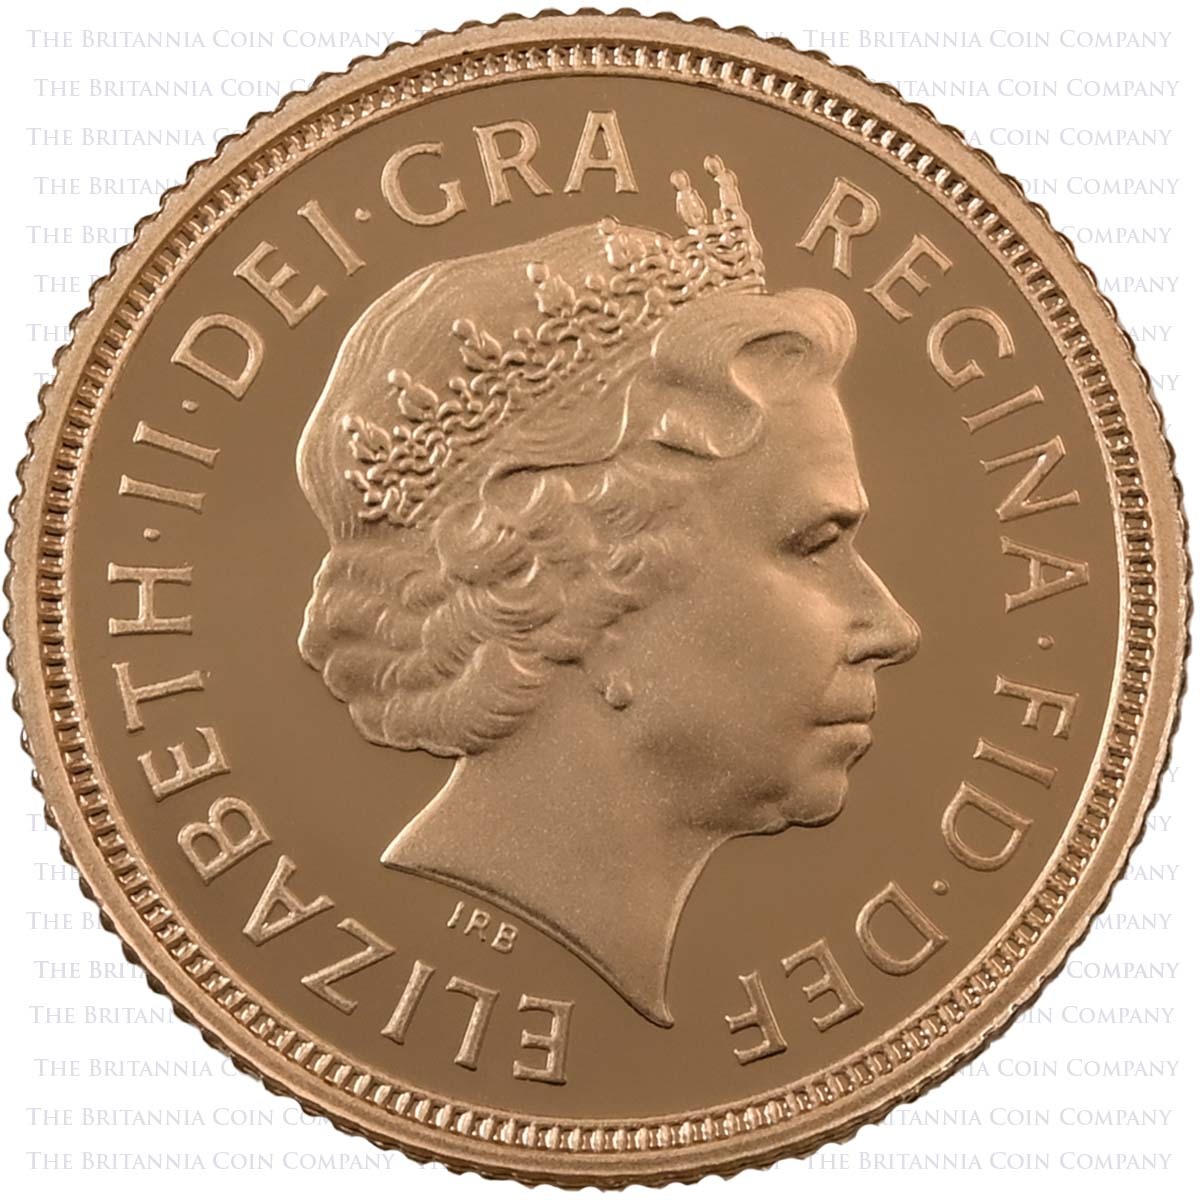 2005 Elizabeth II 3 Coin Gold Proof Sovereign Set Timothy Noad Obverse